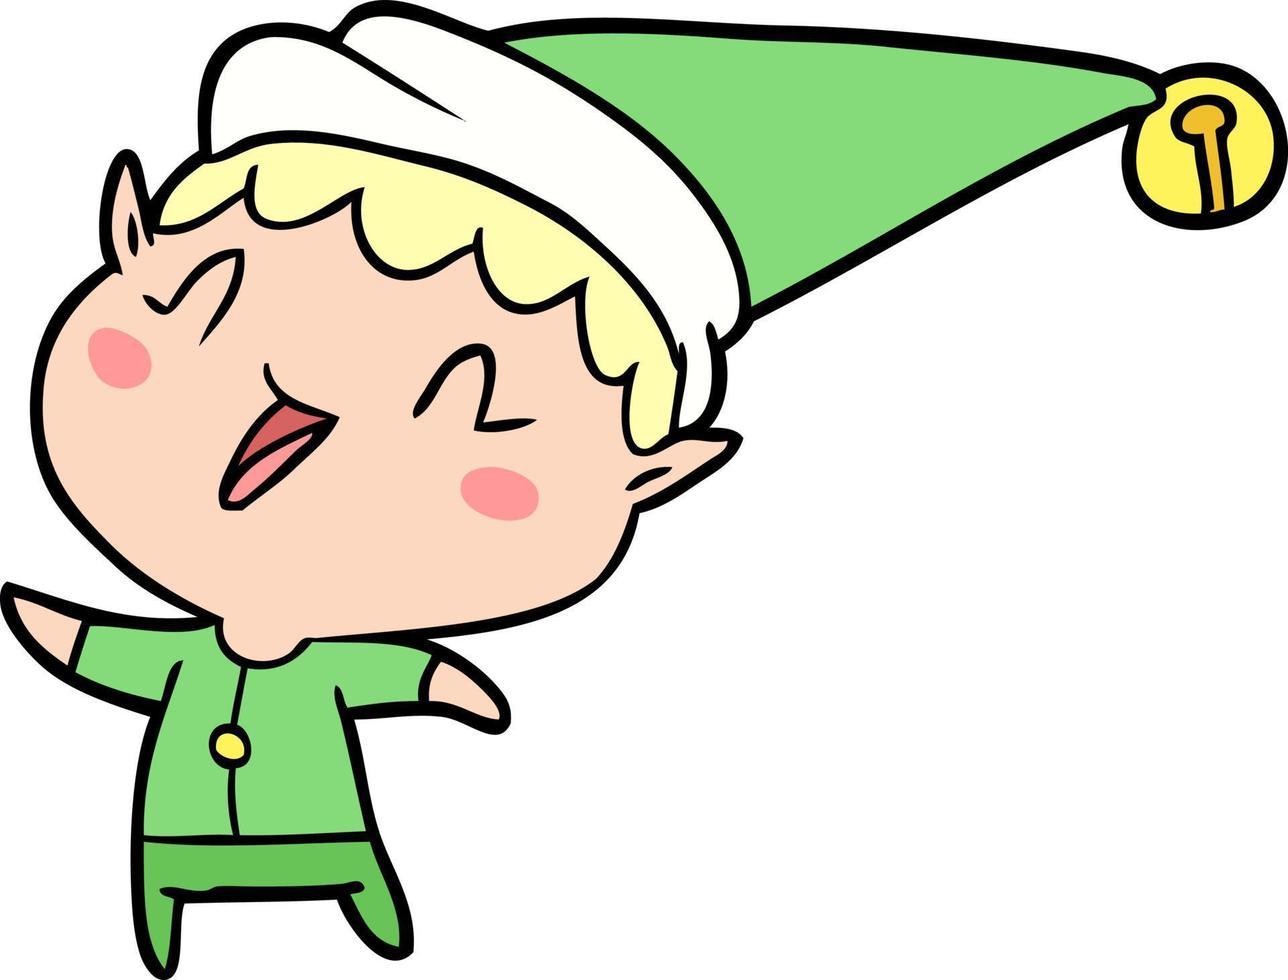 Happy Christmas elf character in cartoon style vector